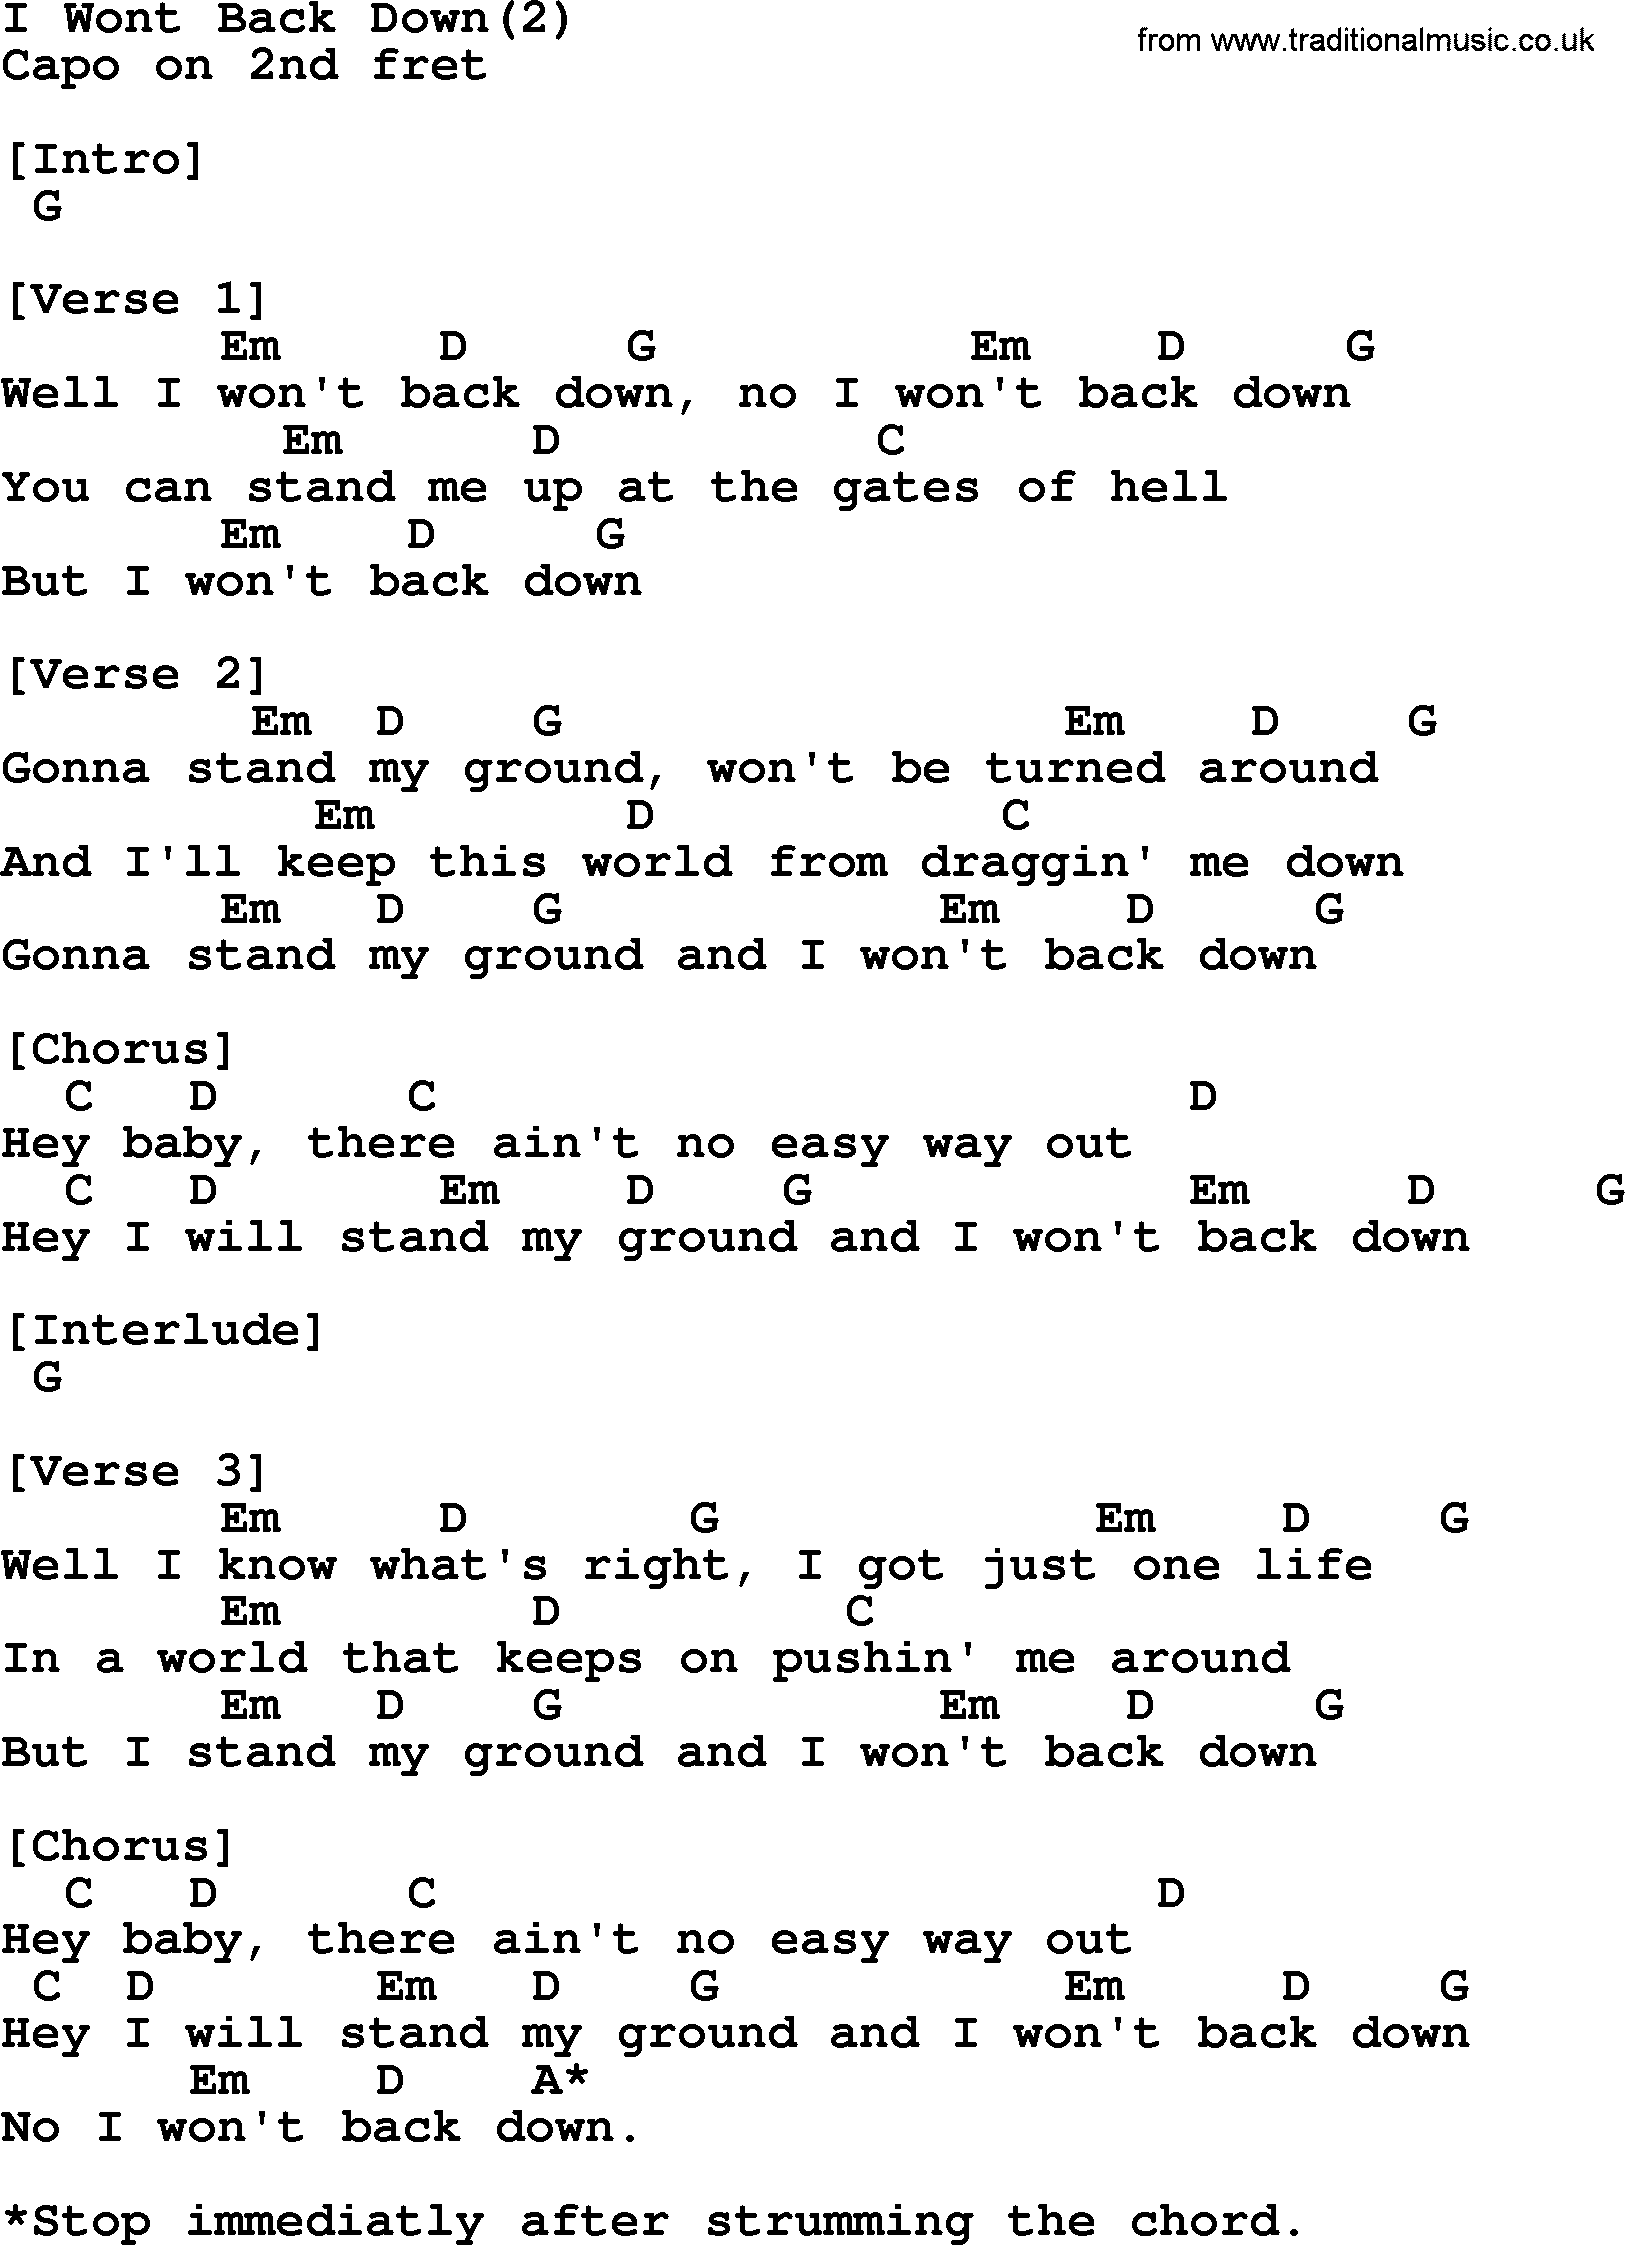 Johnny Cash song I Wont Back Down(2), lyrics and chords